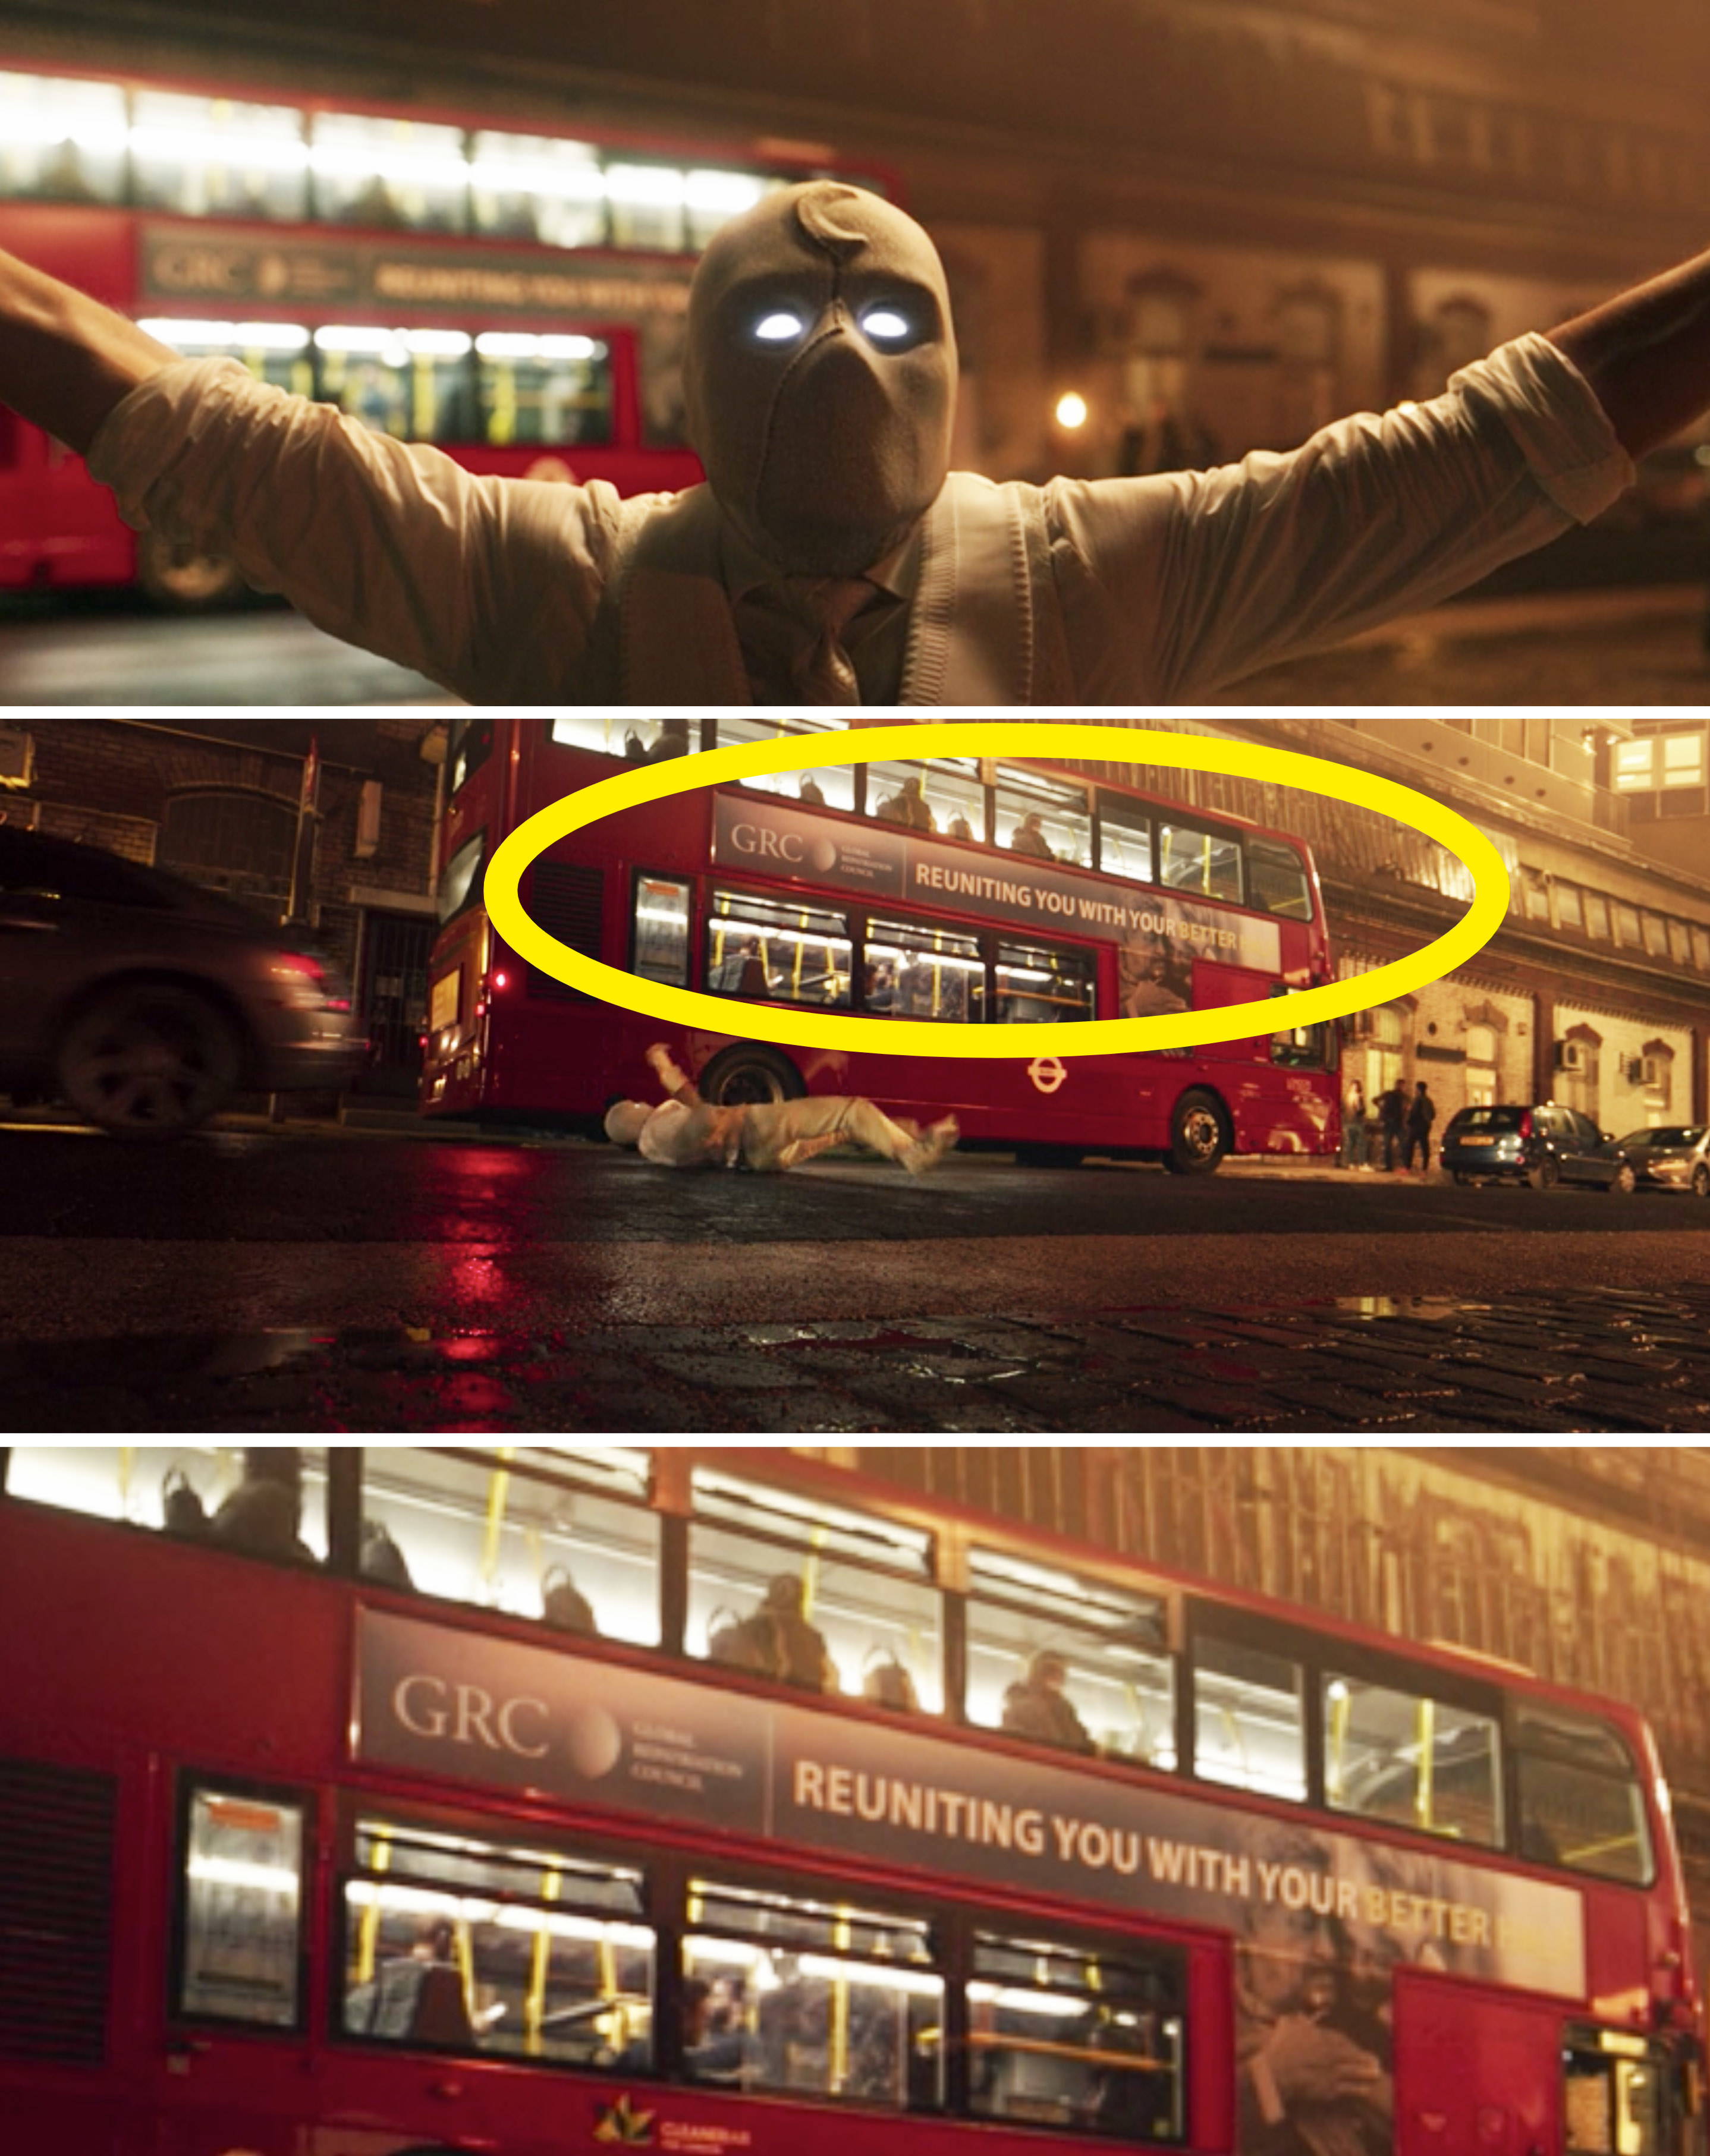 A closeup of the GRC bus ad